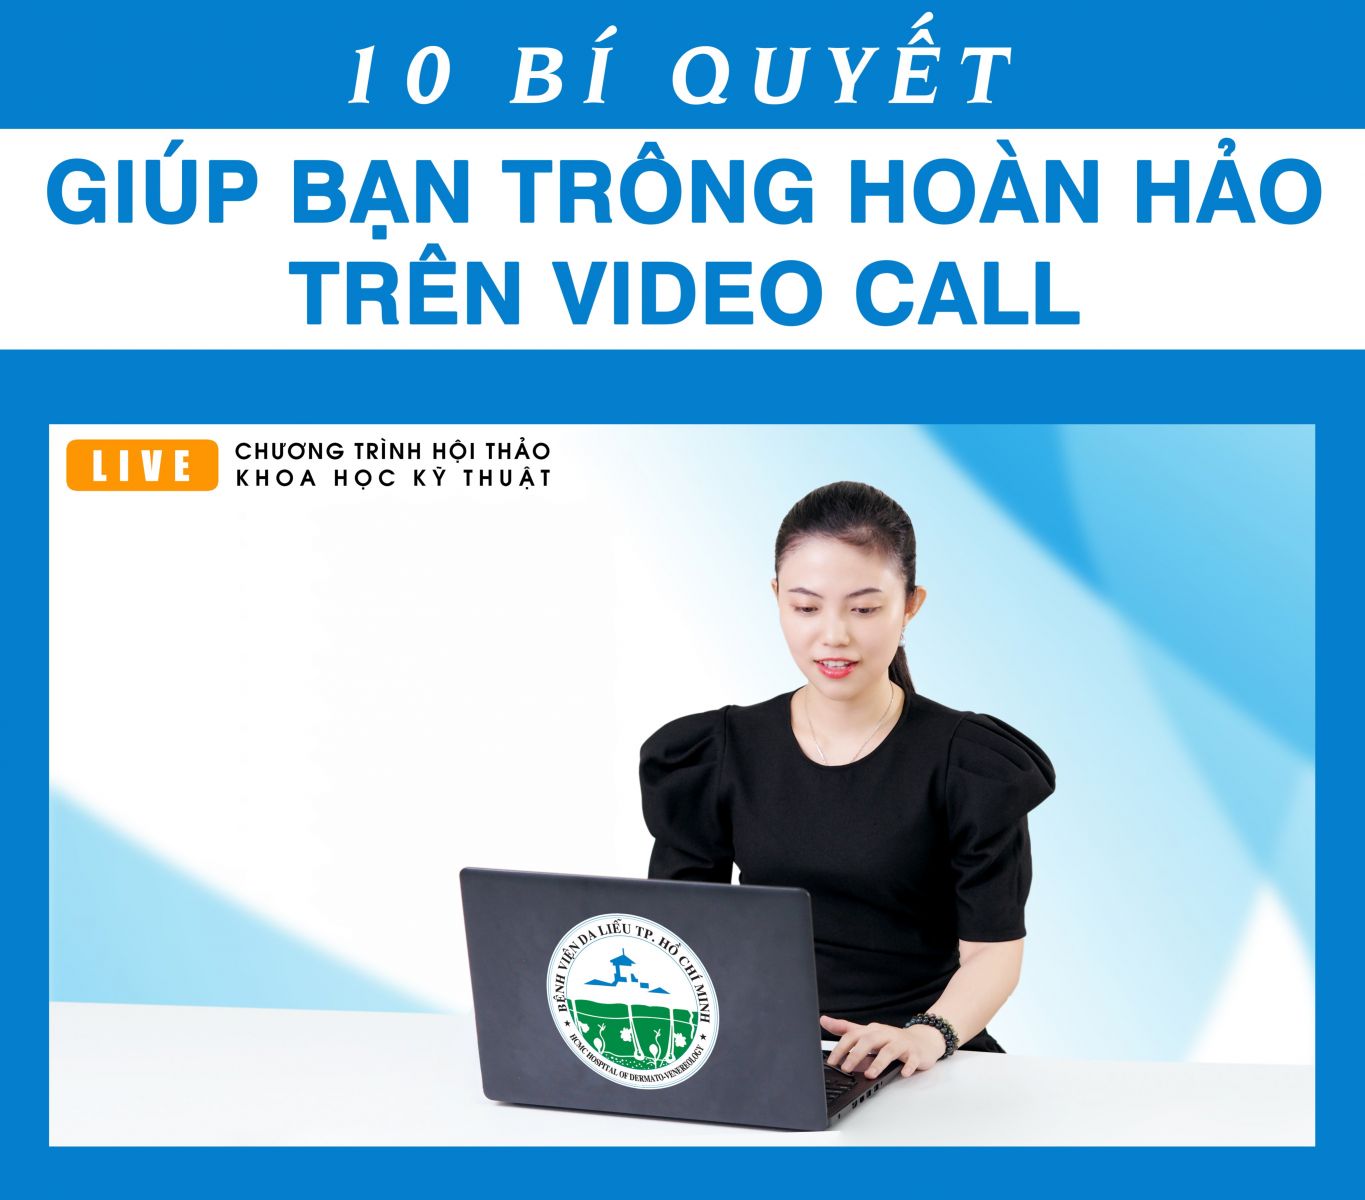 10-bi-quyet-giup-hoan-hao-qua-video-call-ok